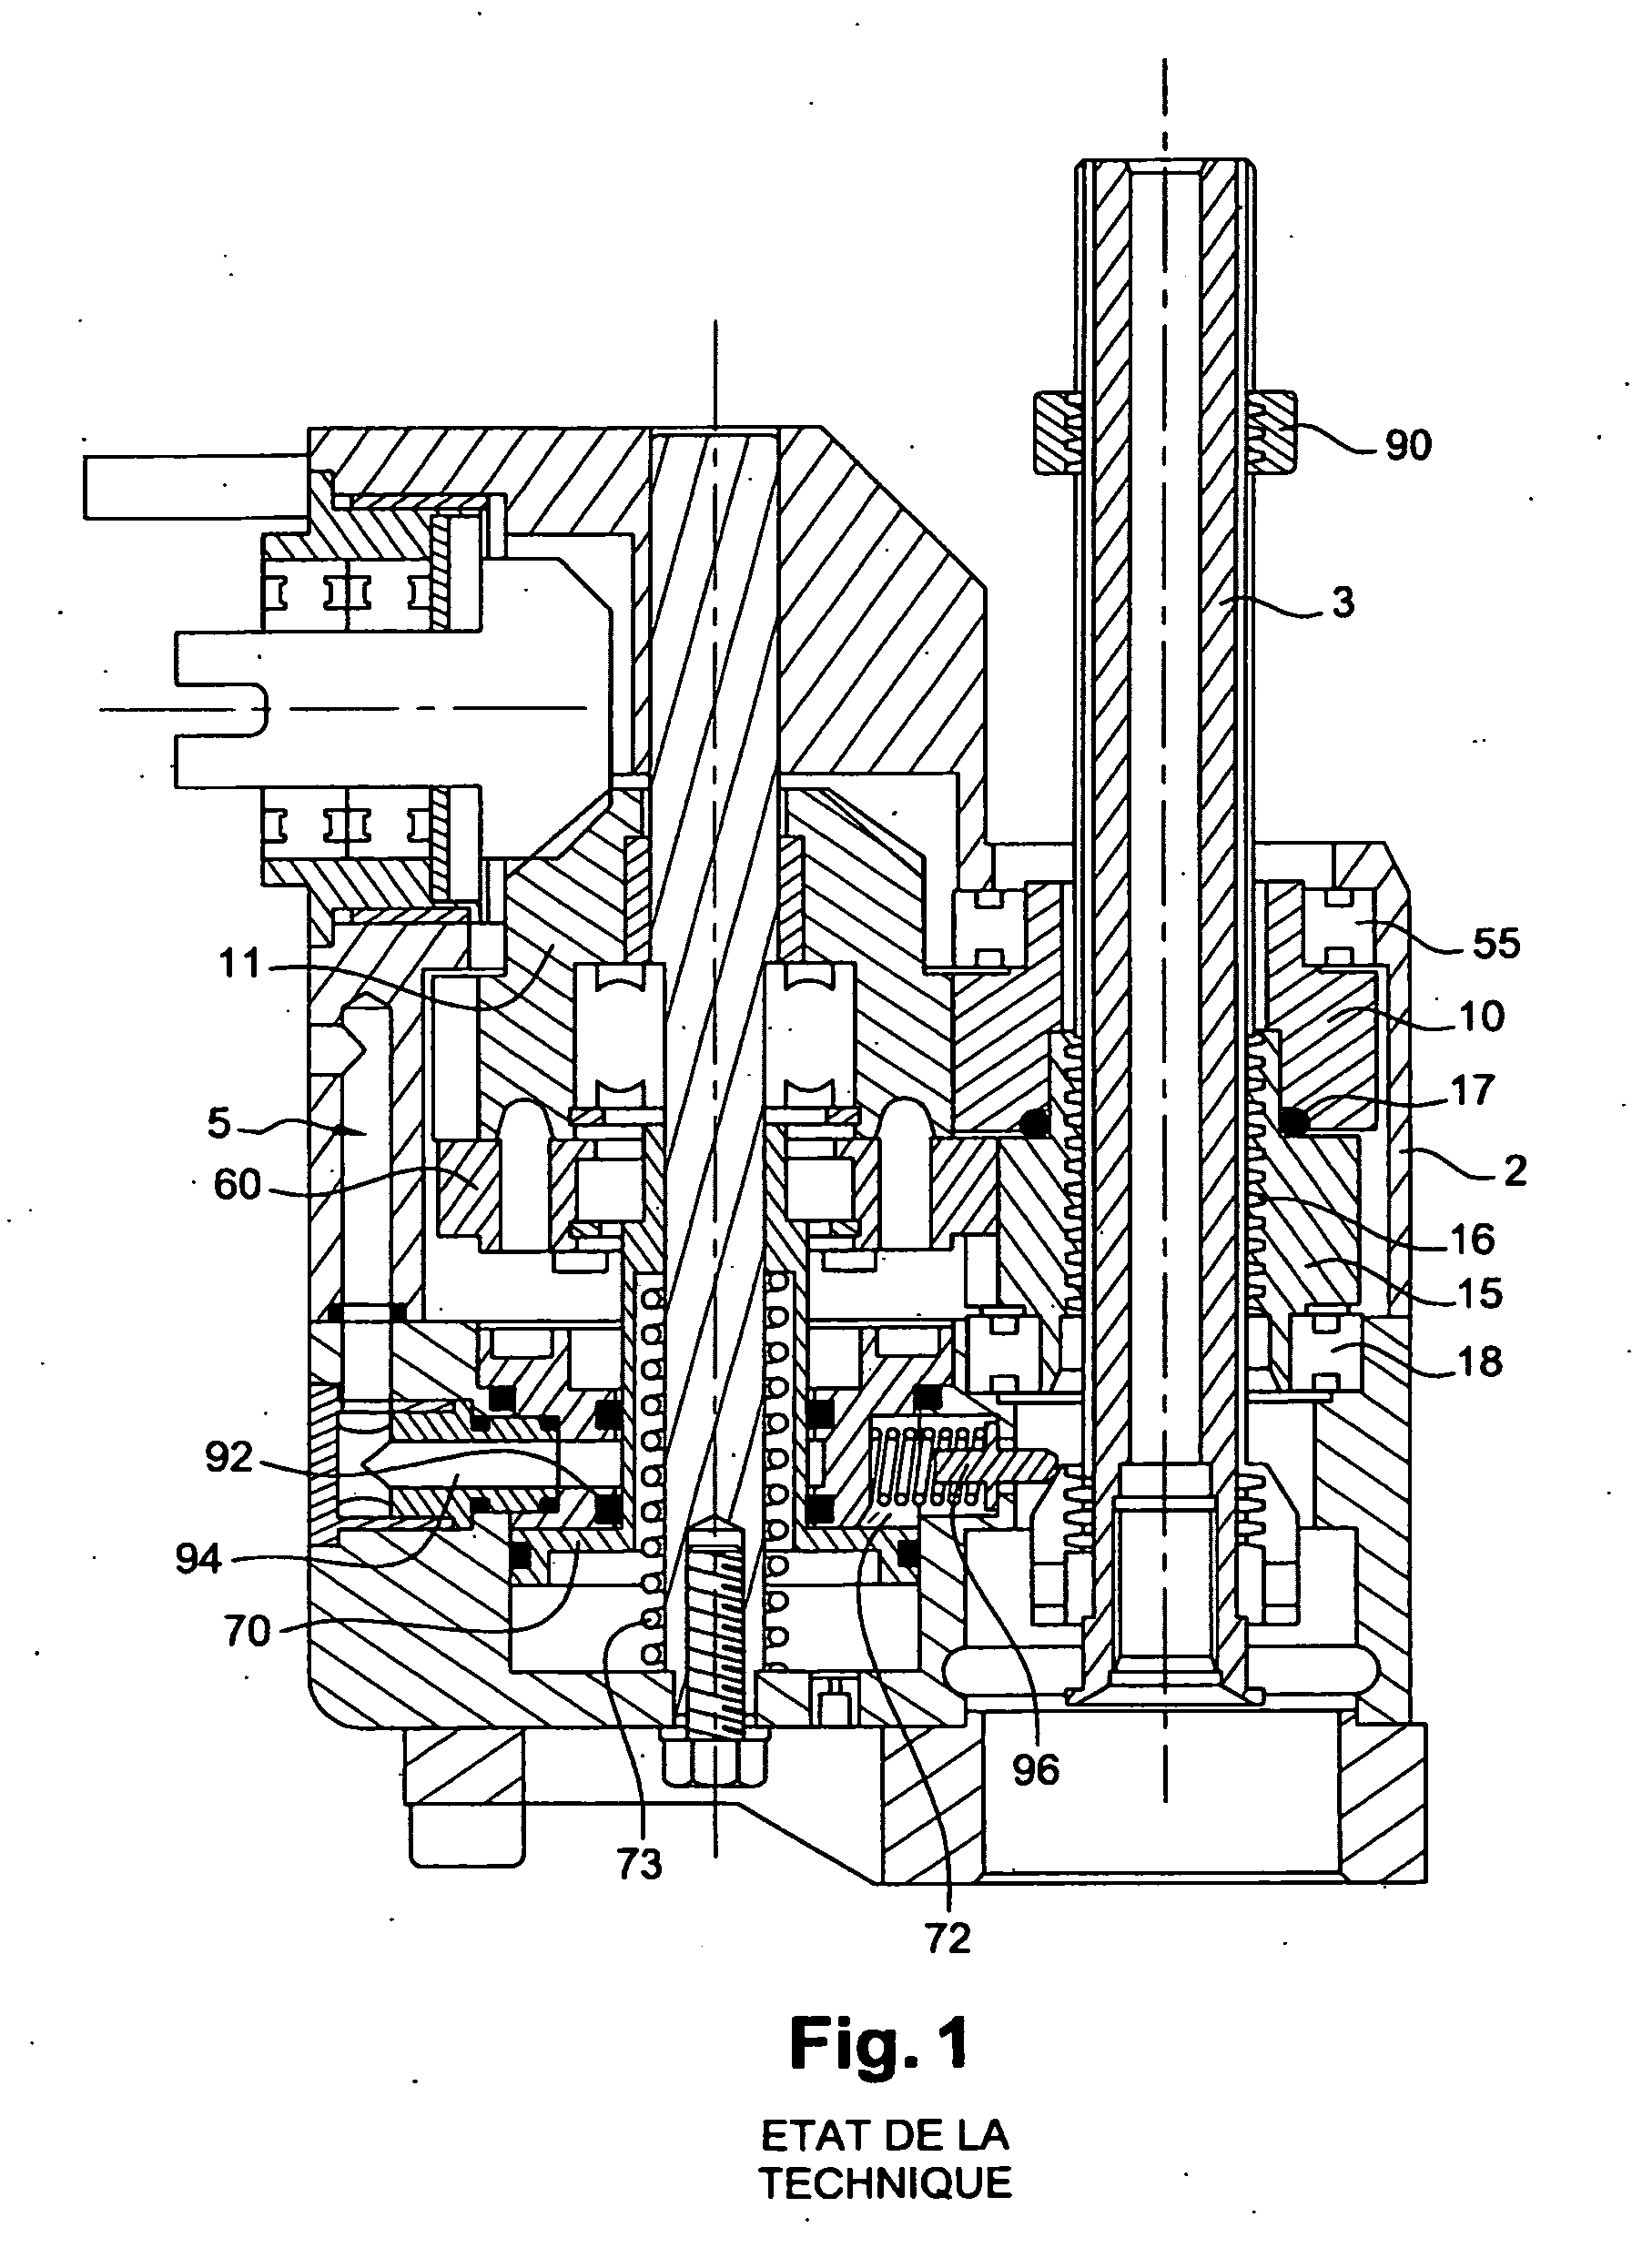 Axial machining device